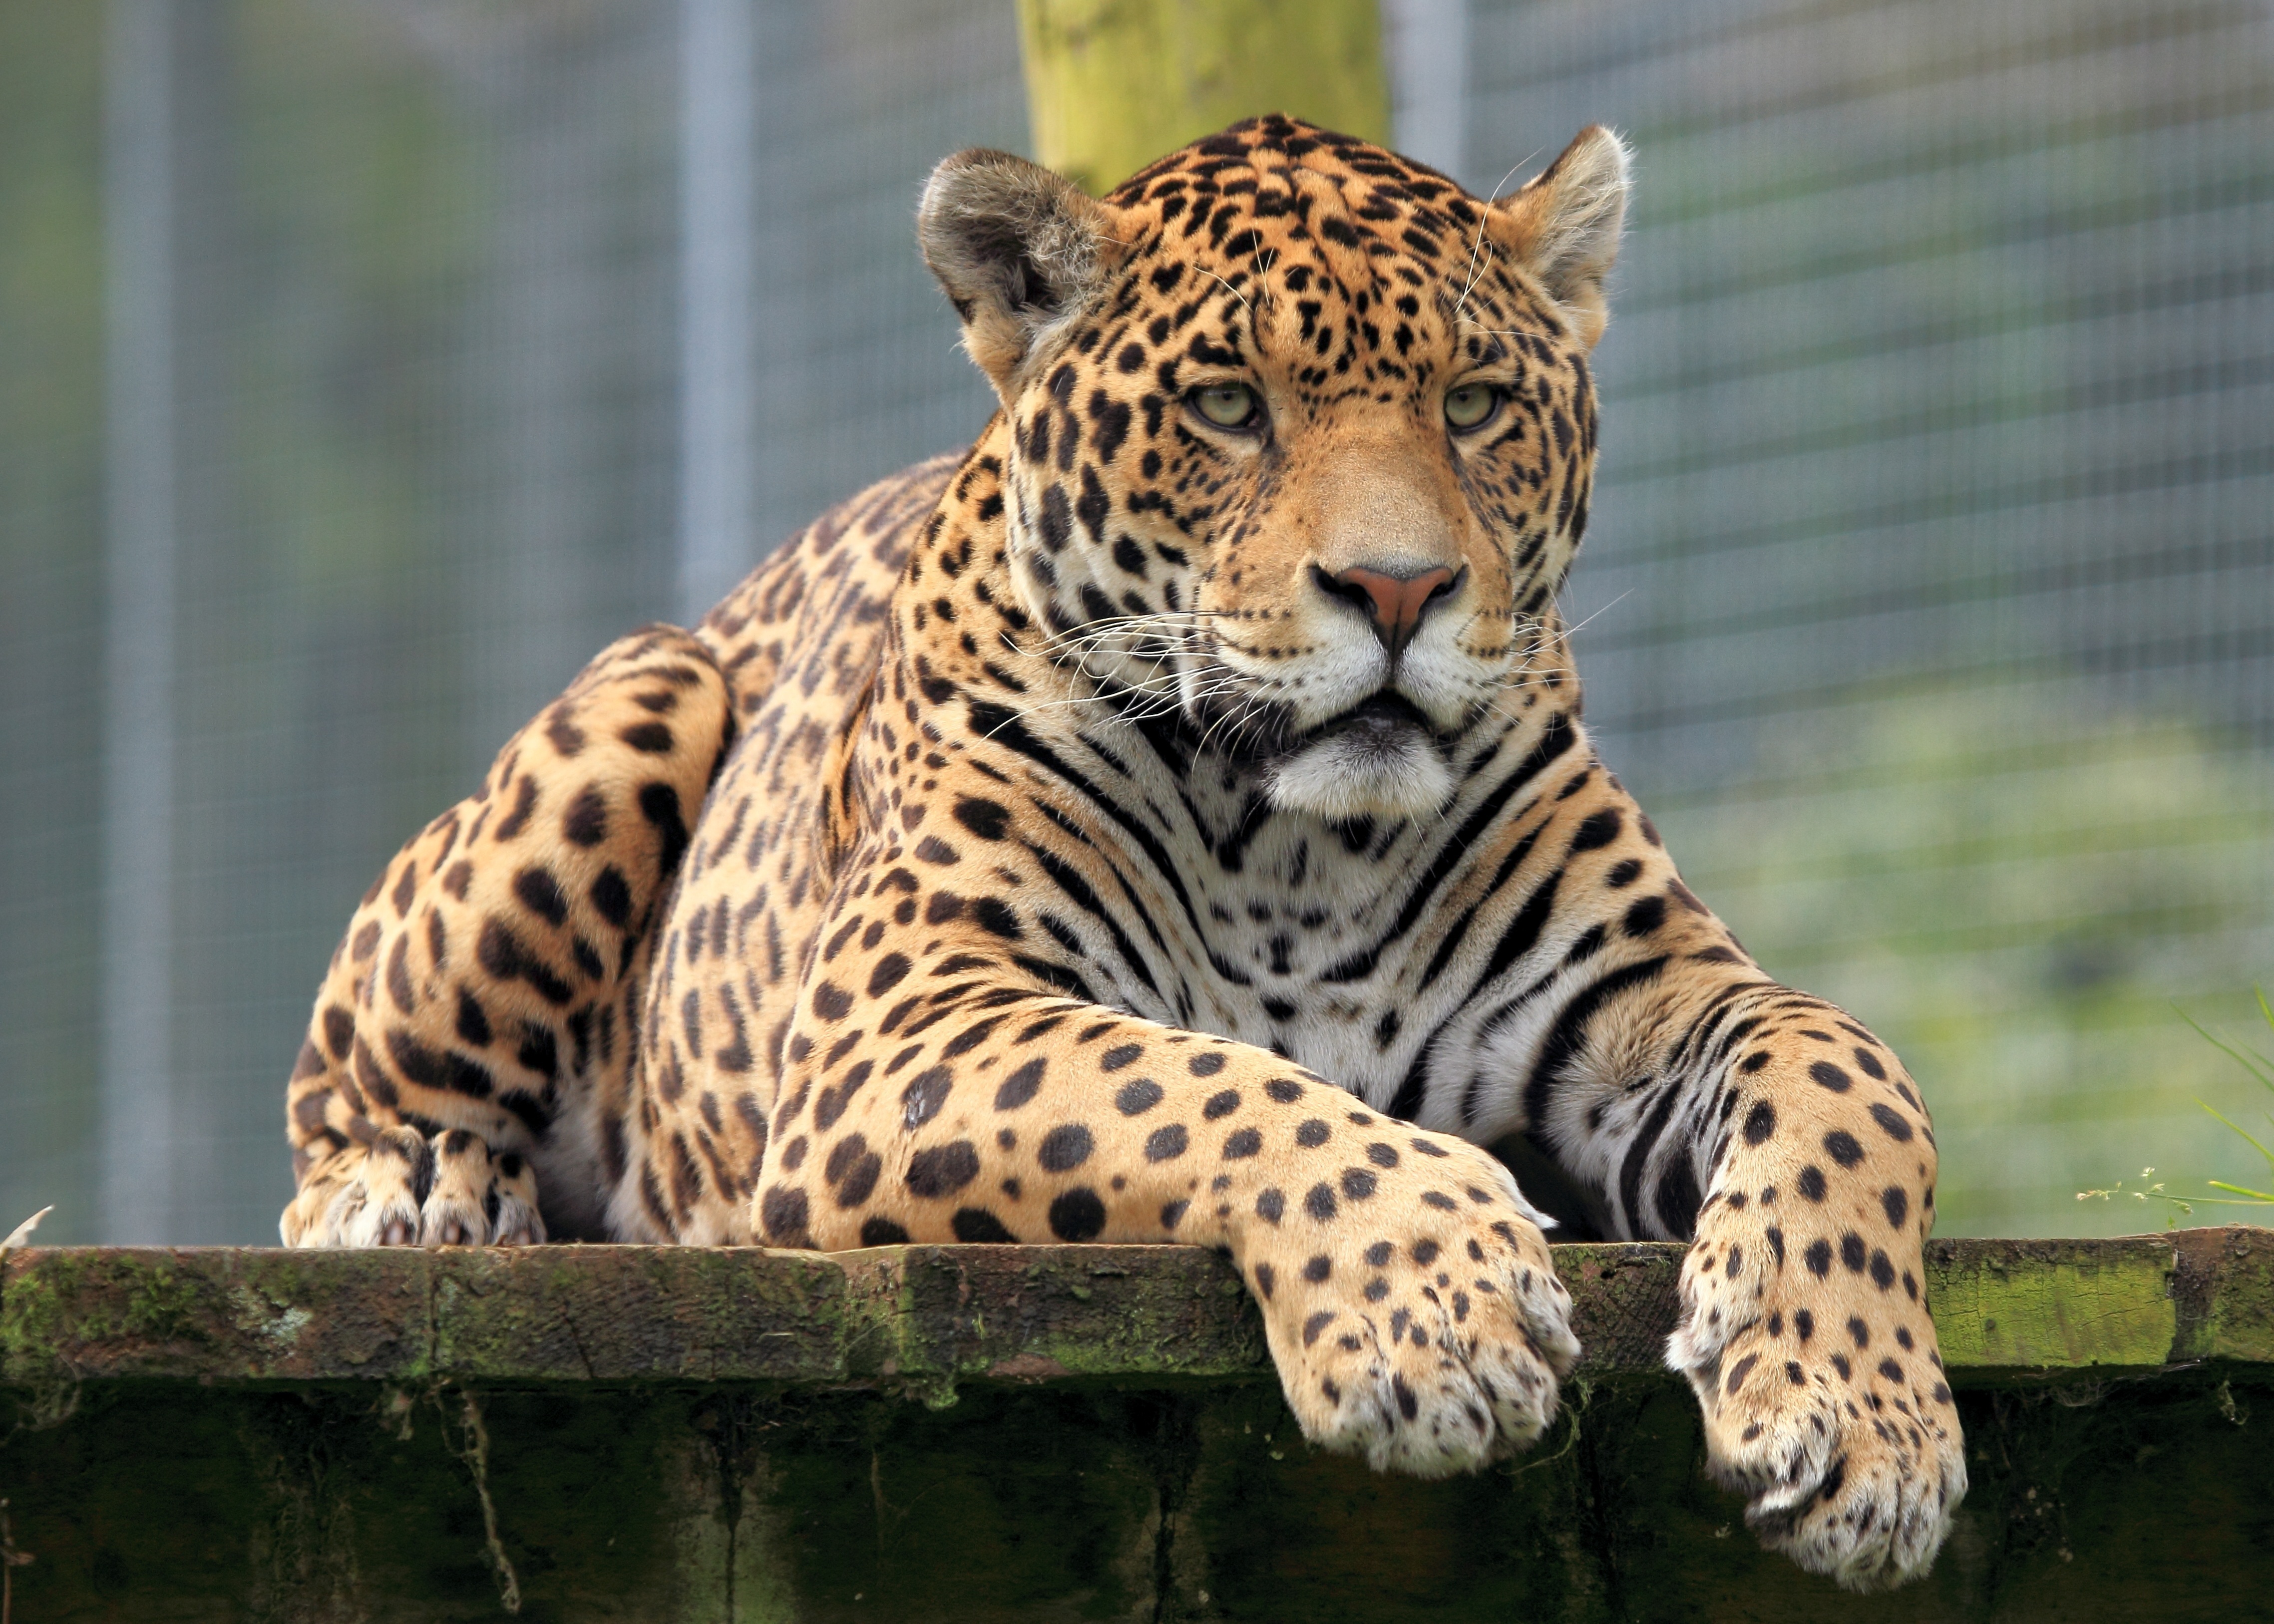 Animals images. Берберийский леопард. Семейство кошачьих Ягуар. Джагуар леопард. Ягуар животное.